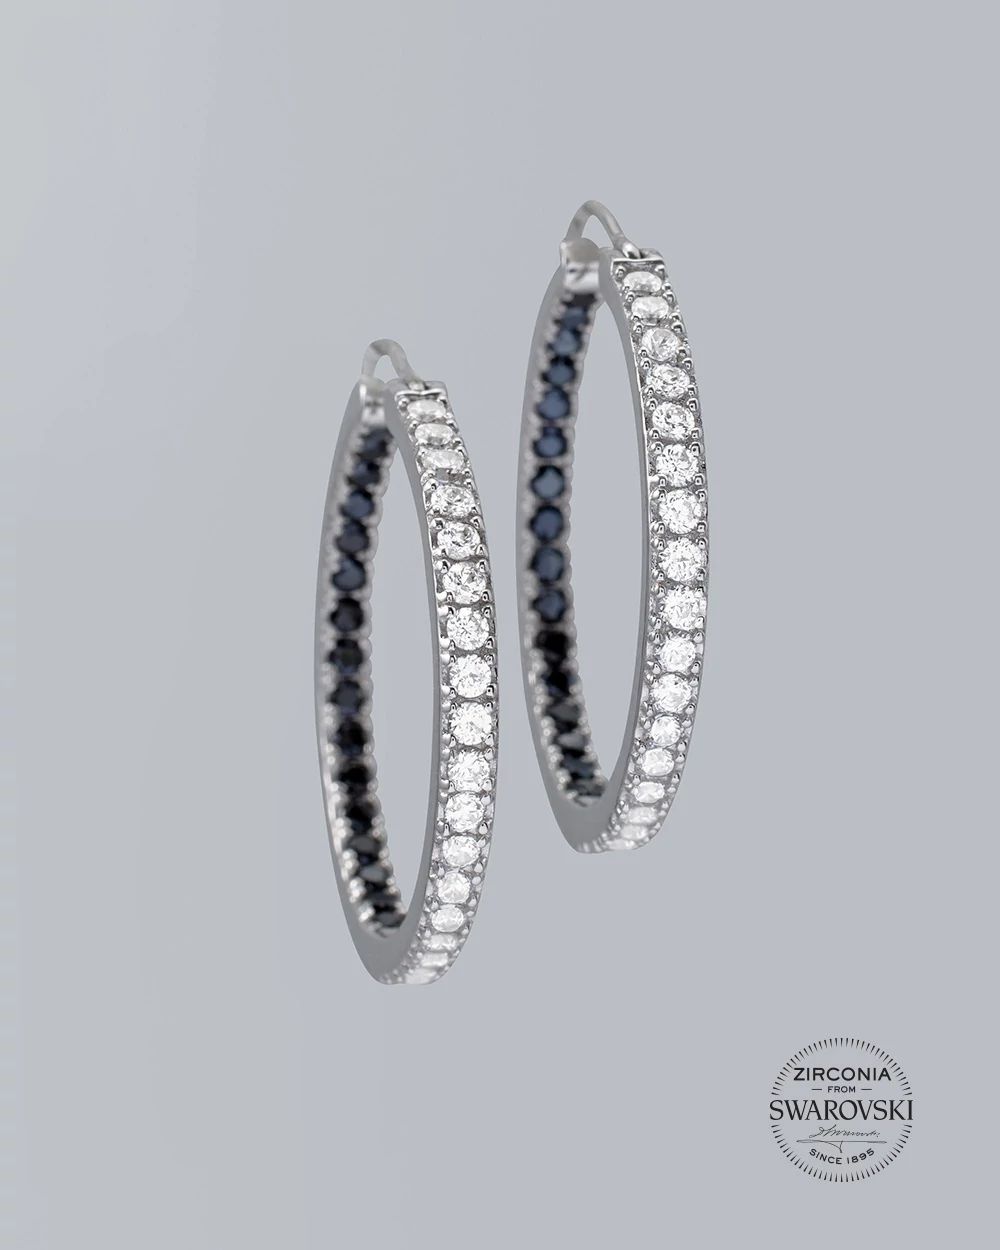 Sterling Silver Black & White Pavé Hoops With Zirconia From Swarovski®